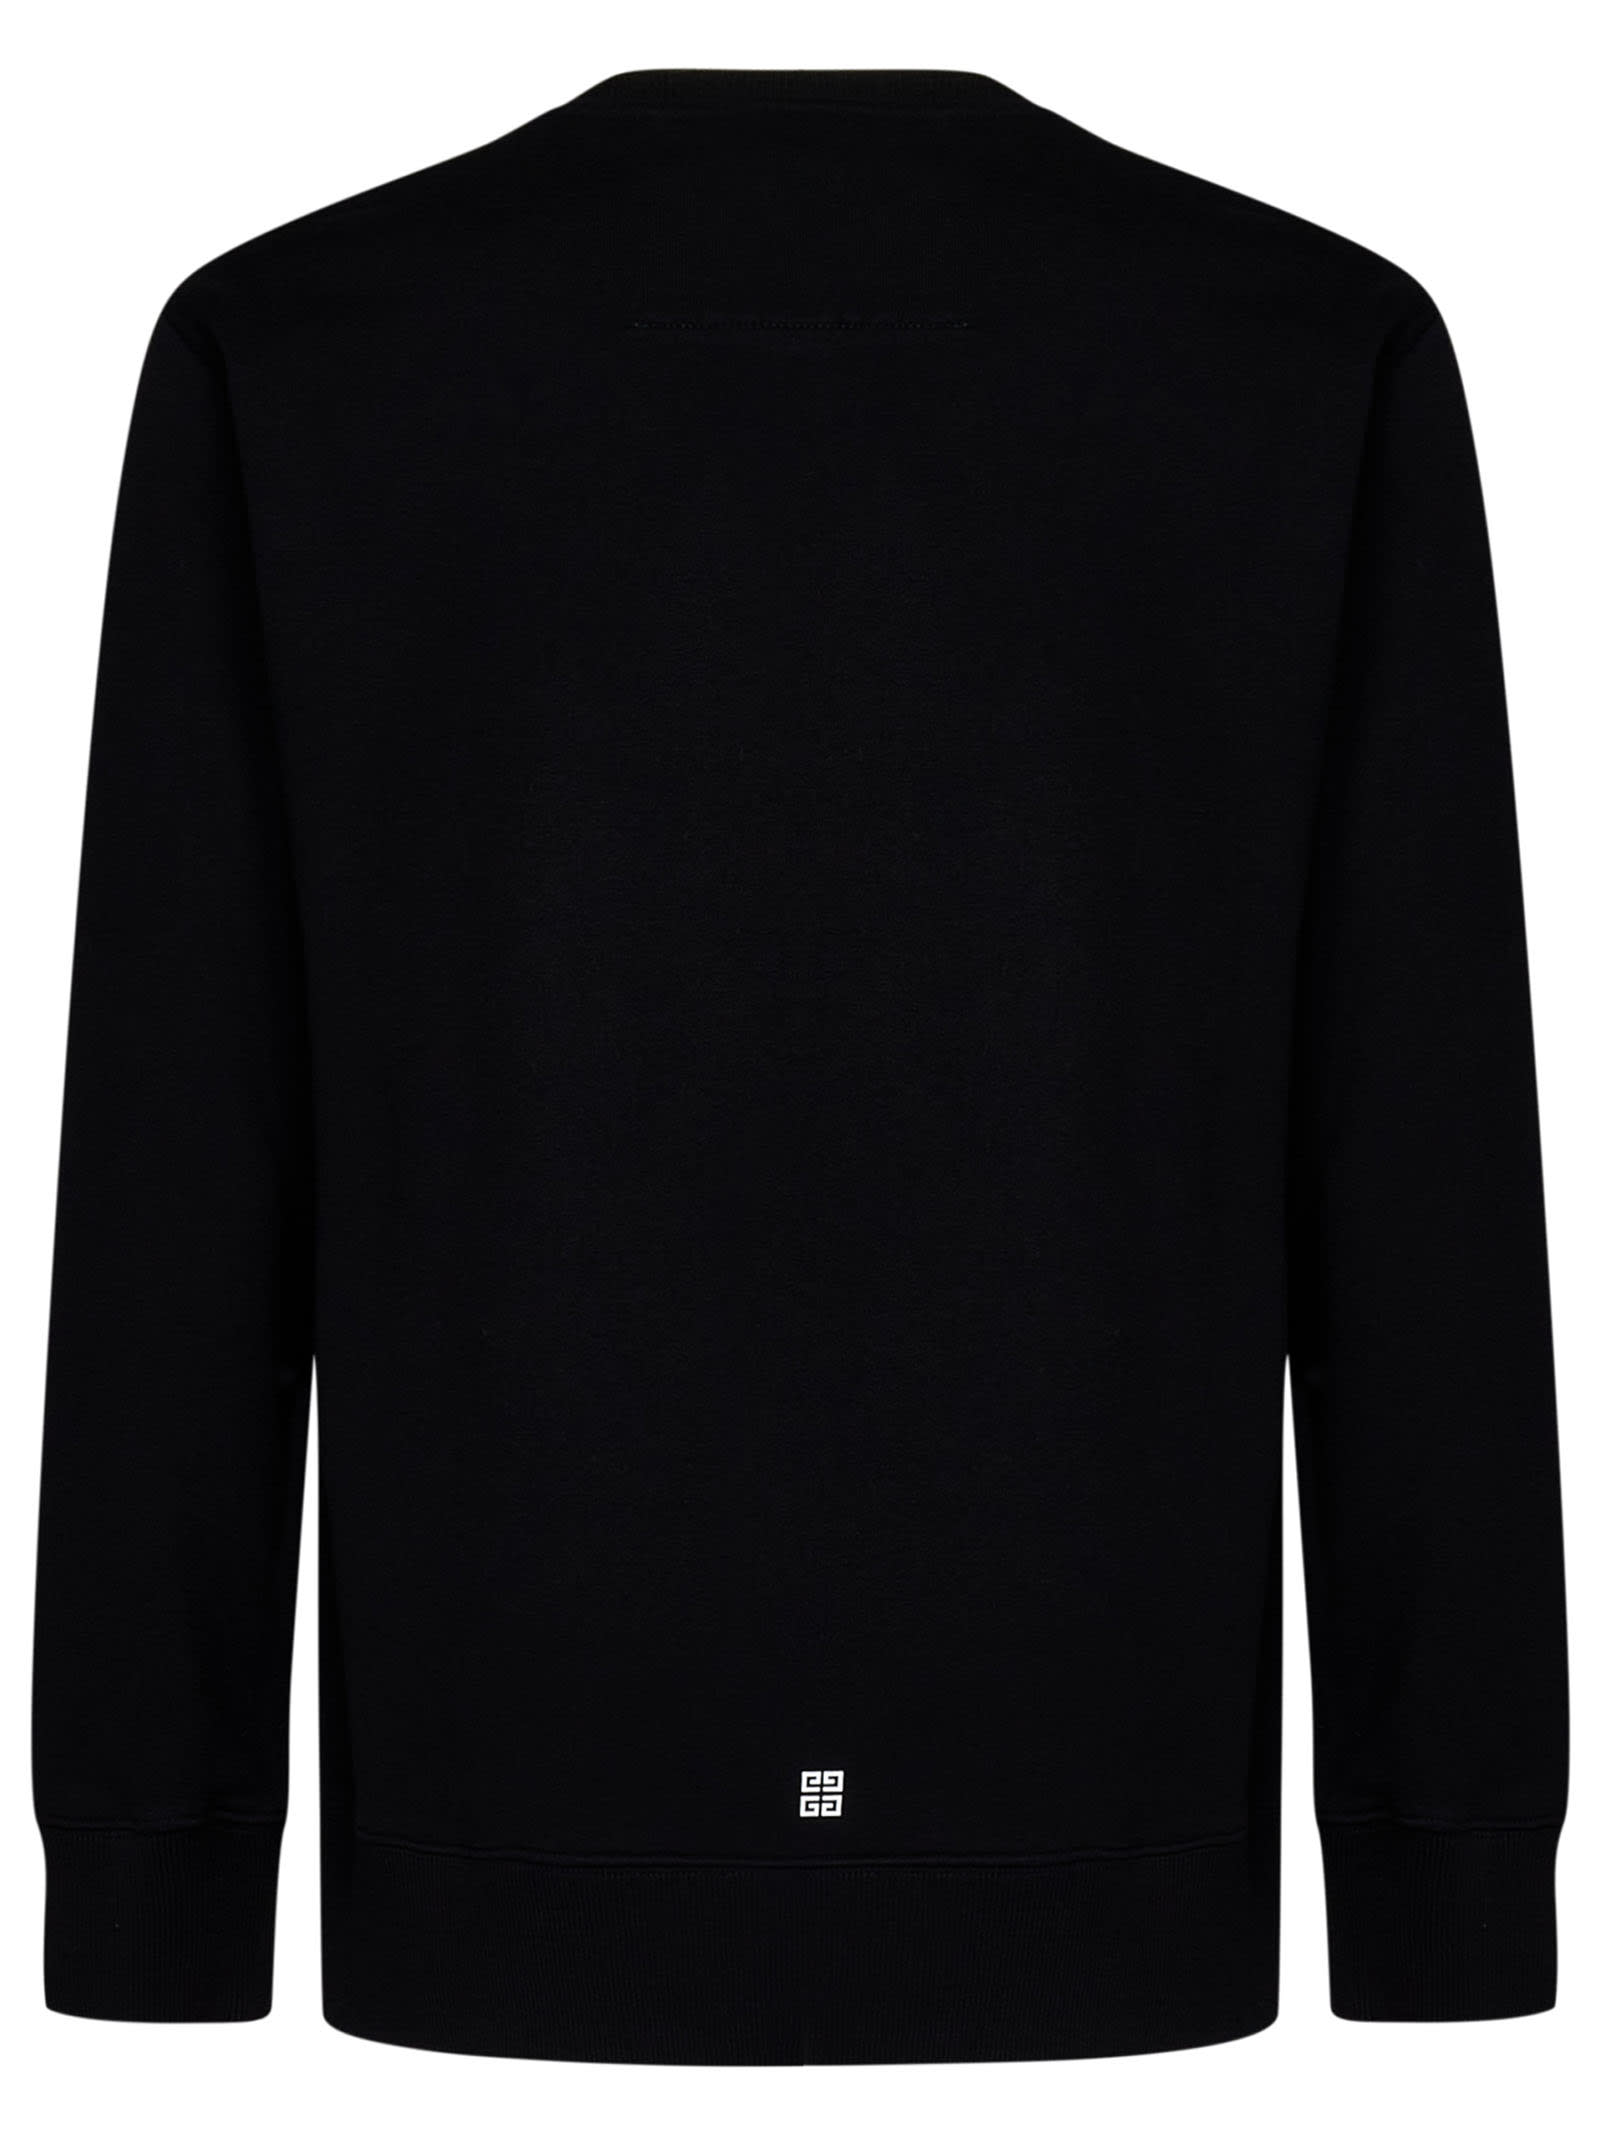 Shop Givenchy Archetype Sweatshirt In Black